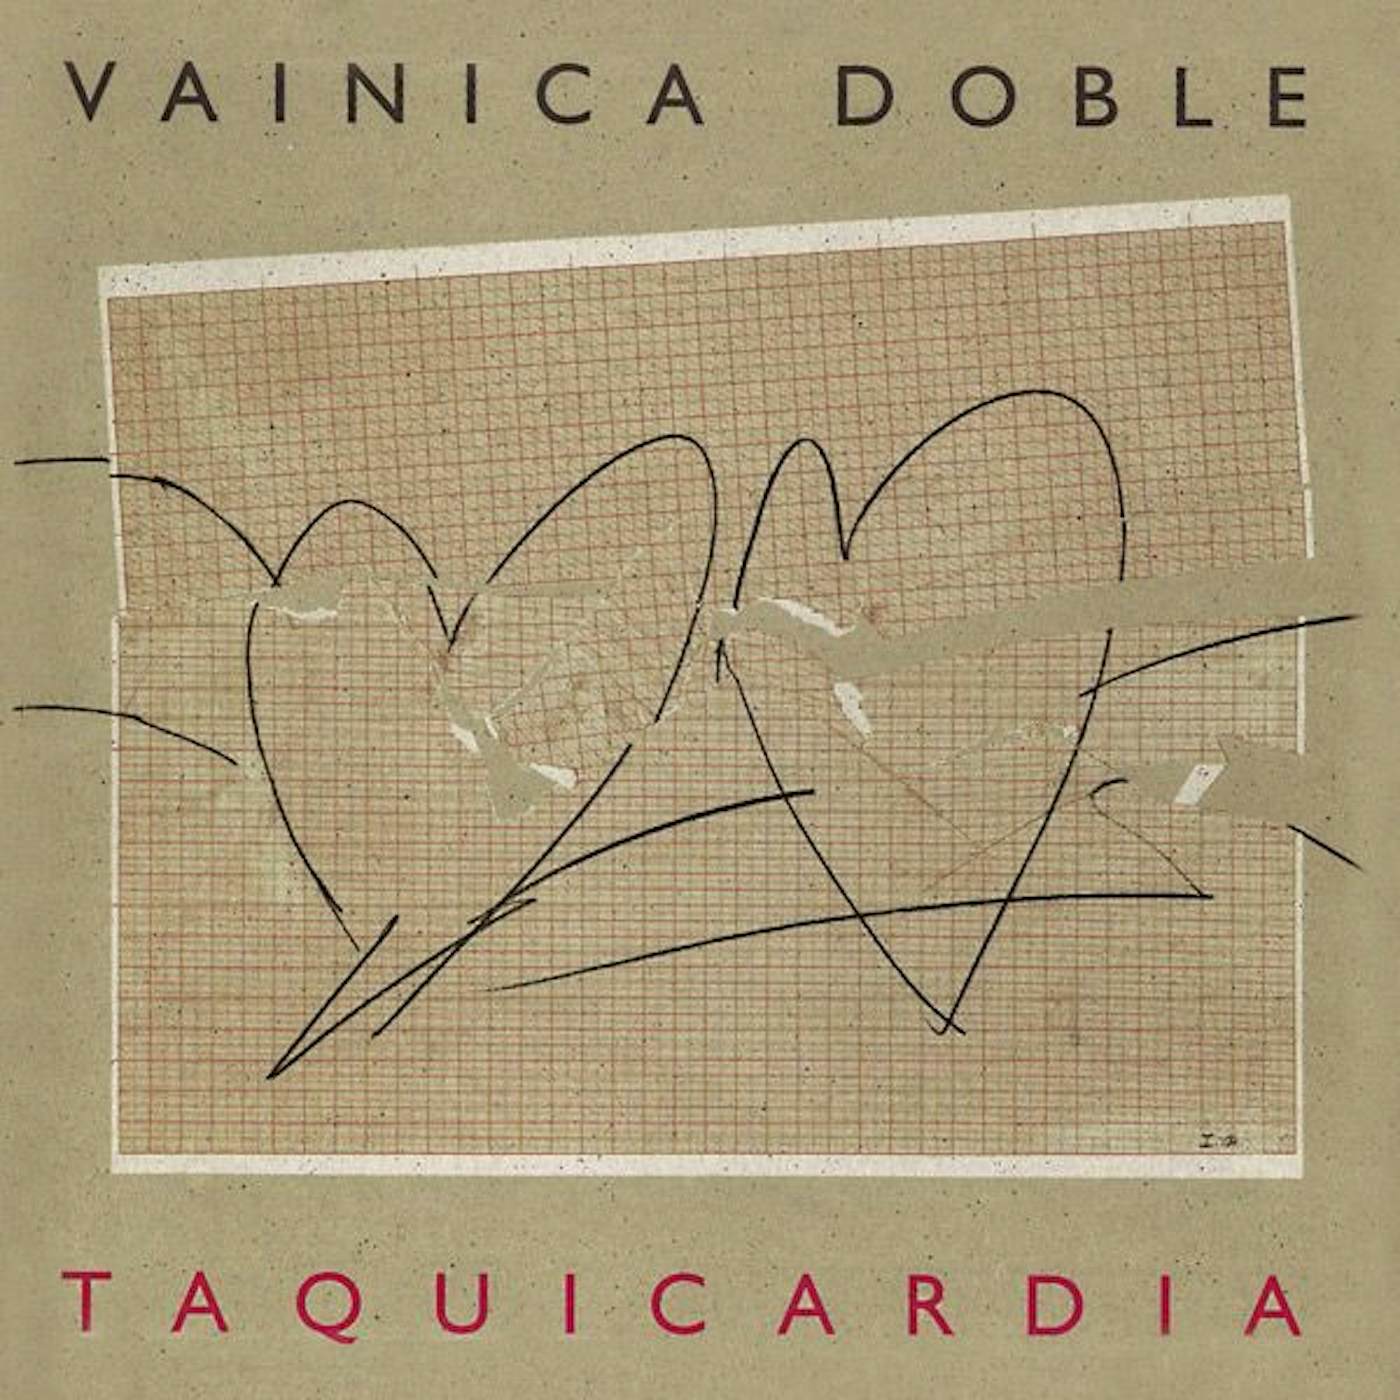 Vainica Doble Taquicardia Vinyl Record